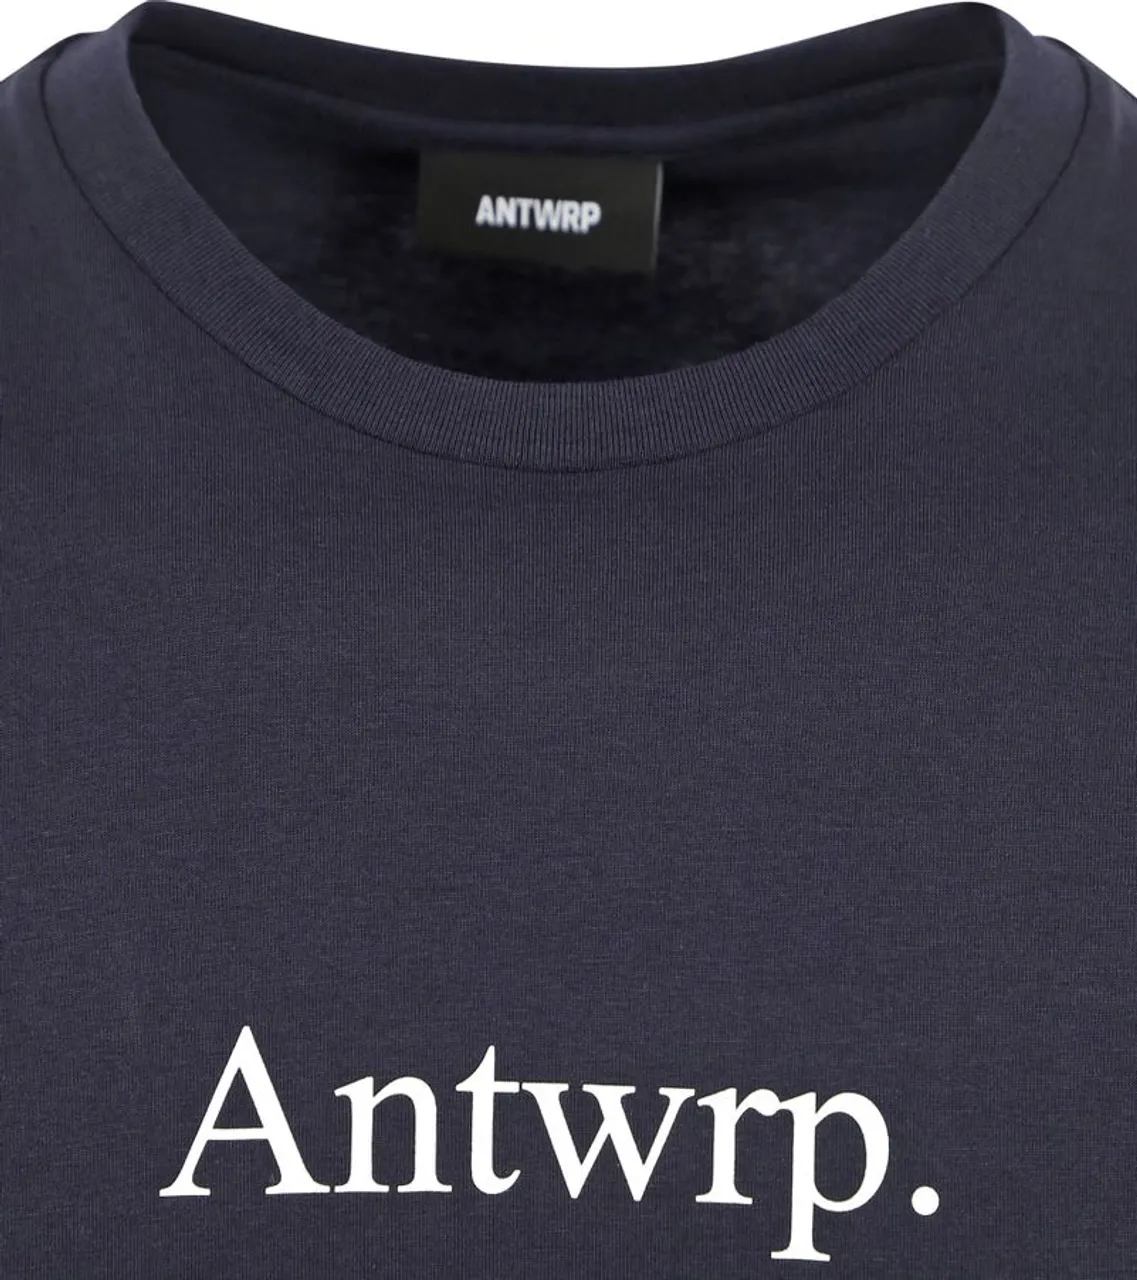 ANTWRP T-Shirt Logo Navy